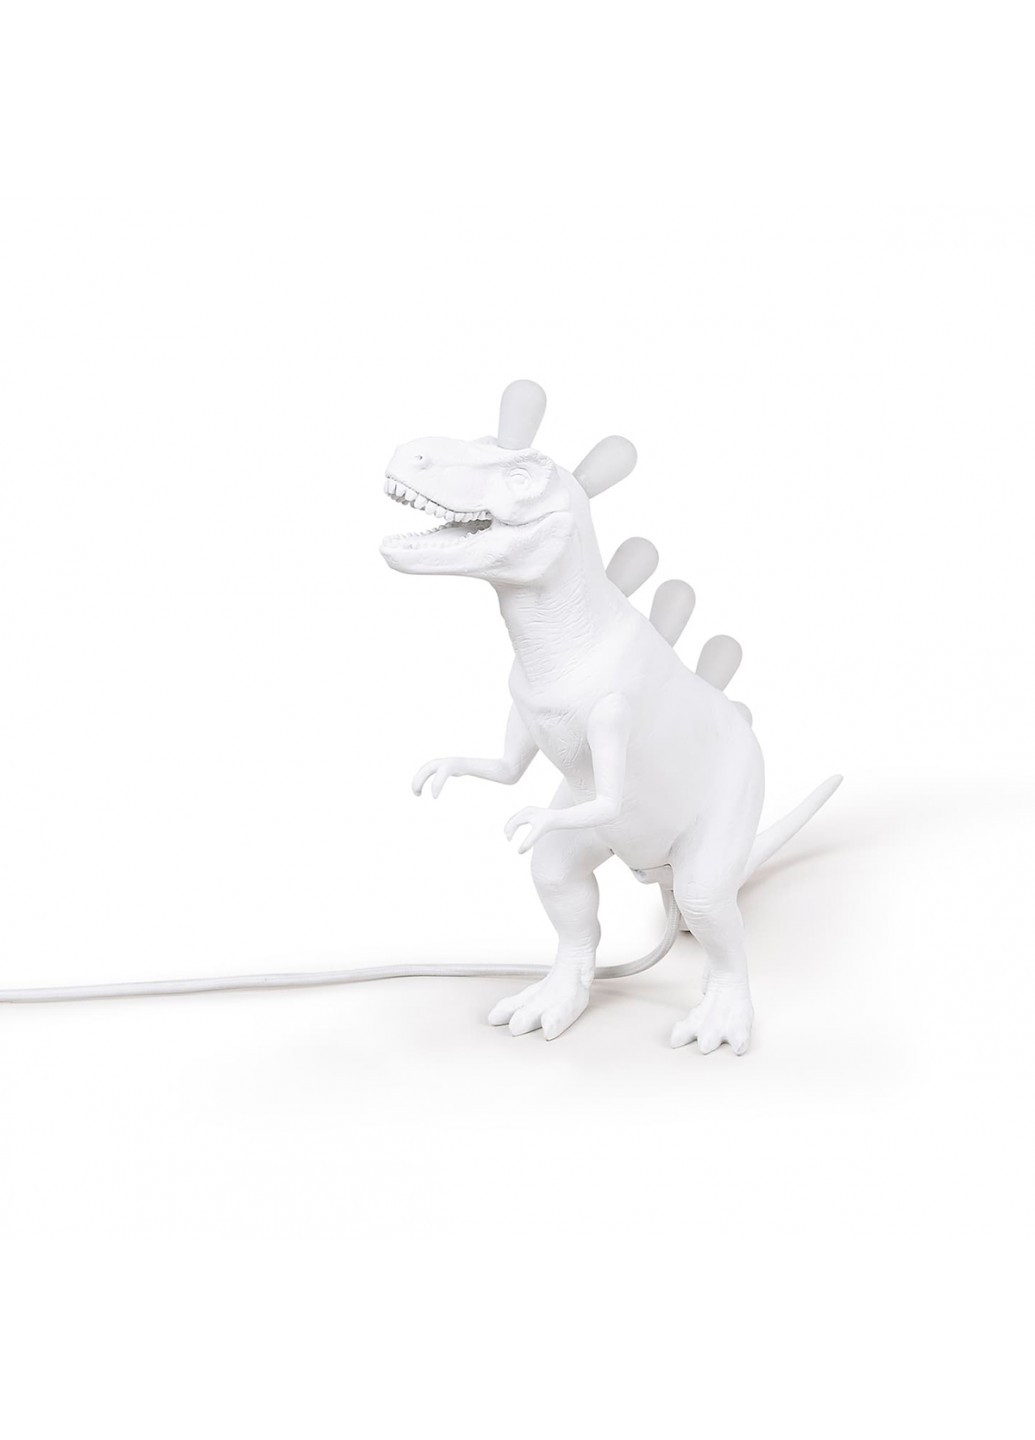 Светильник Динозавр; белый Seletti 14783.0 (218826652)